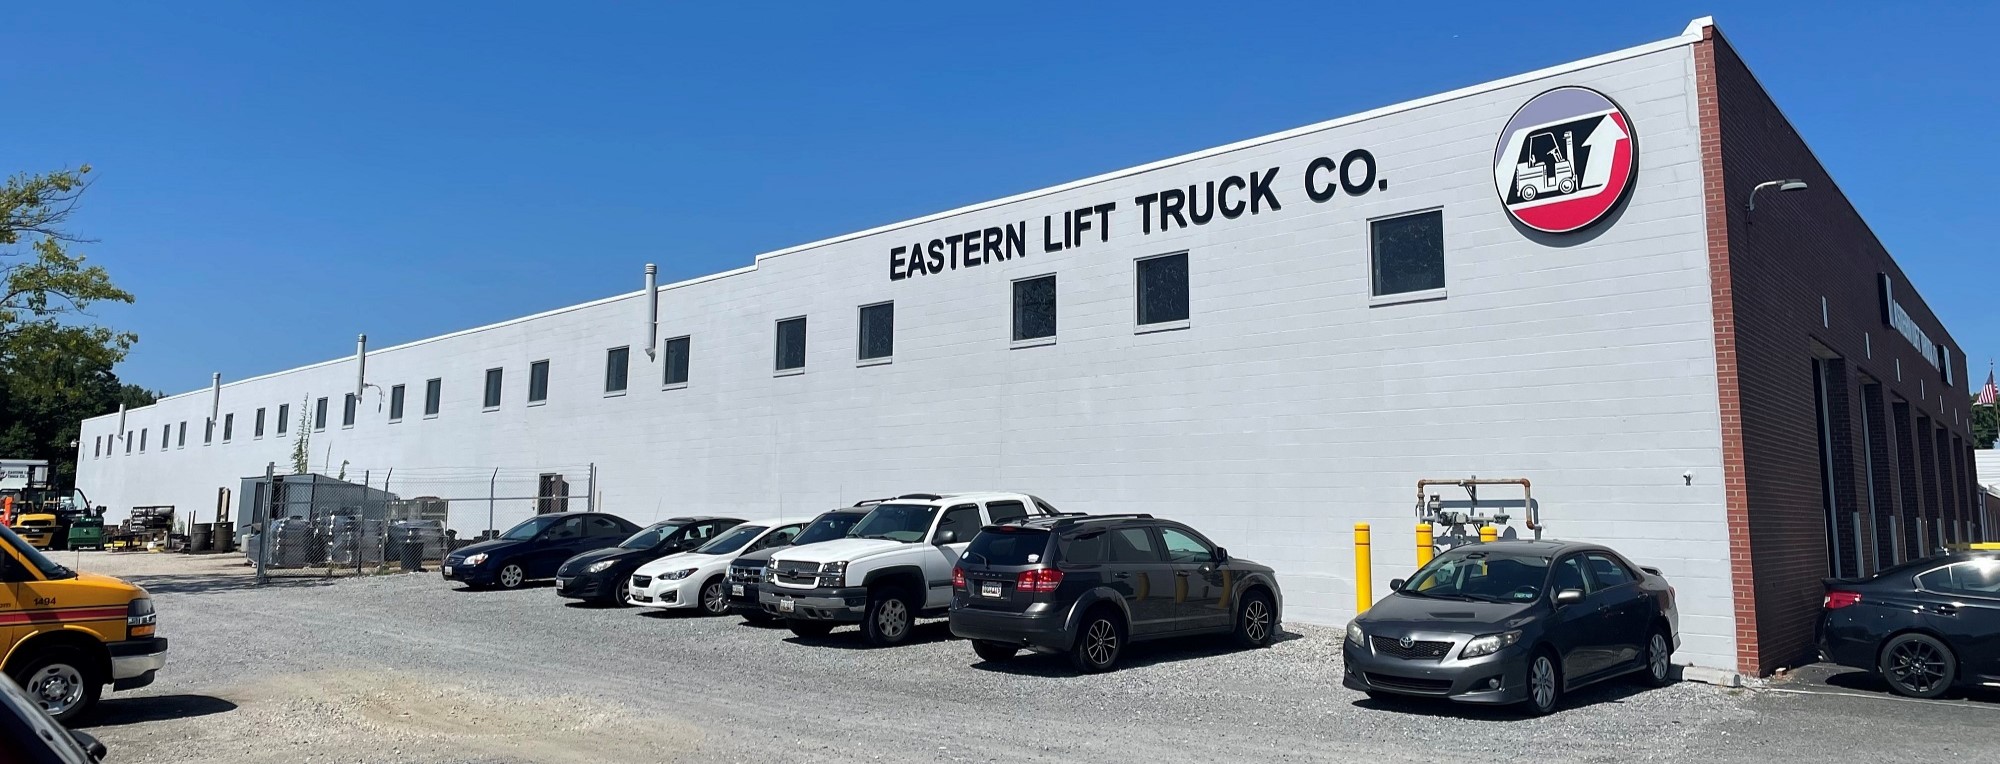 New Factory Cat XR-46C  Eastern Lift Truck Co., Inc.